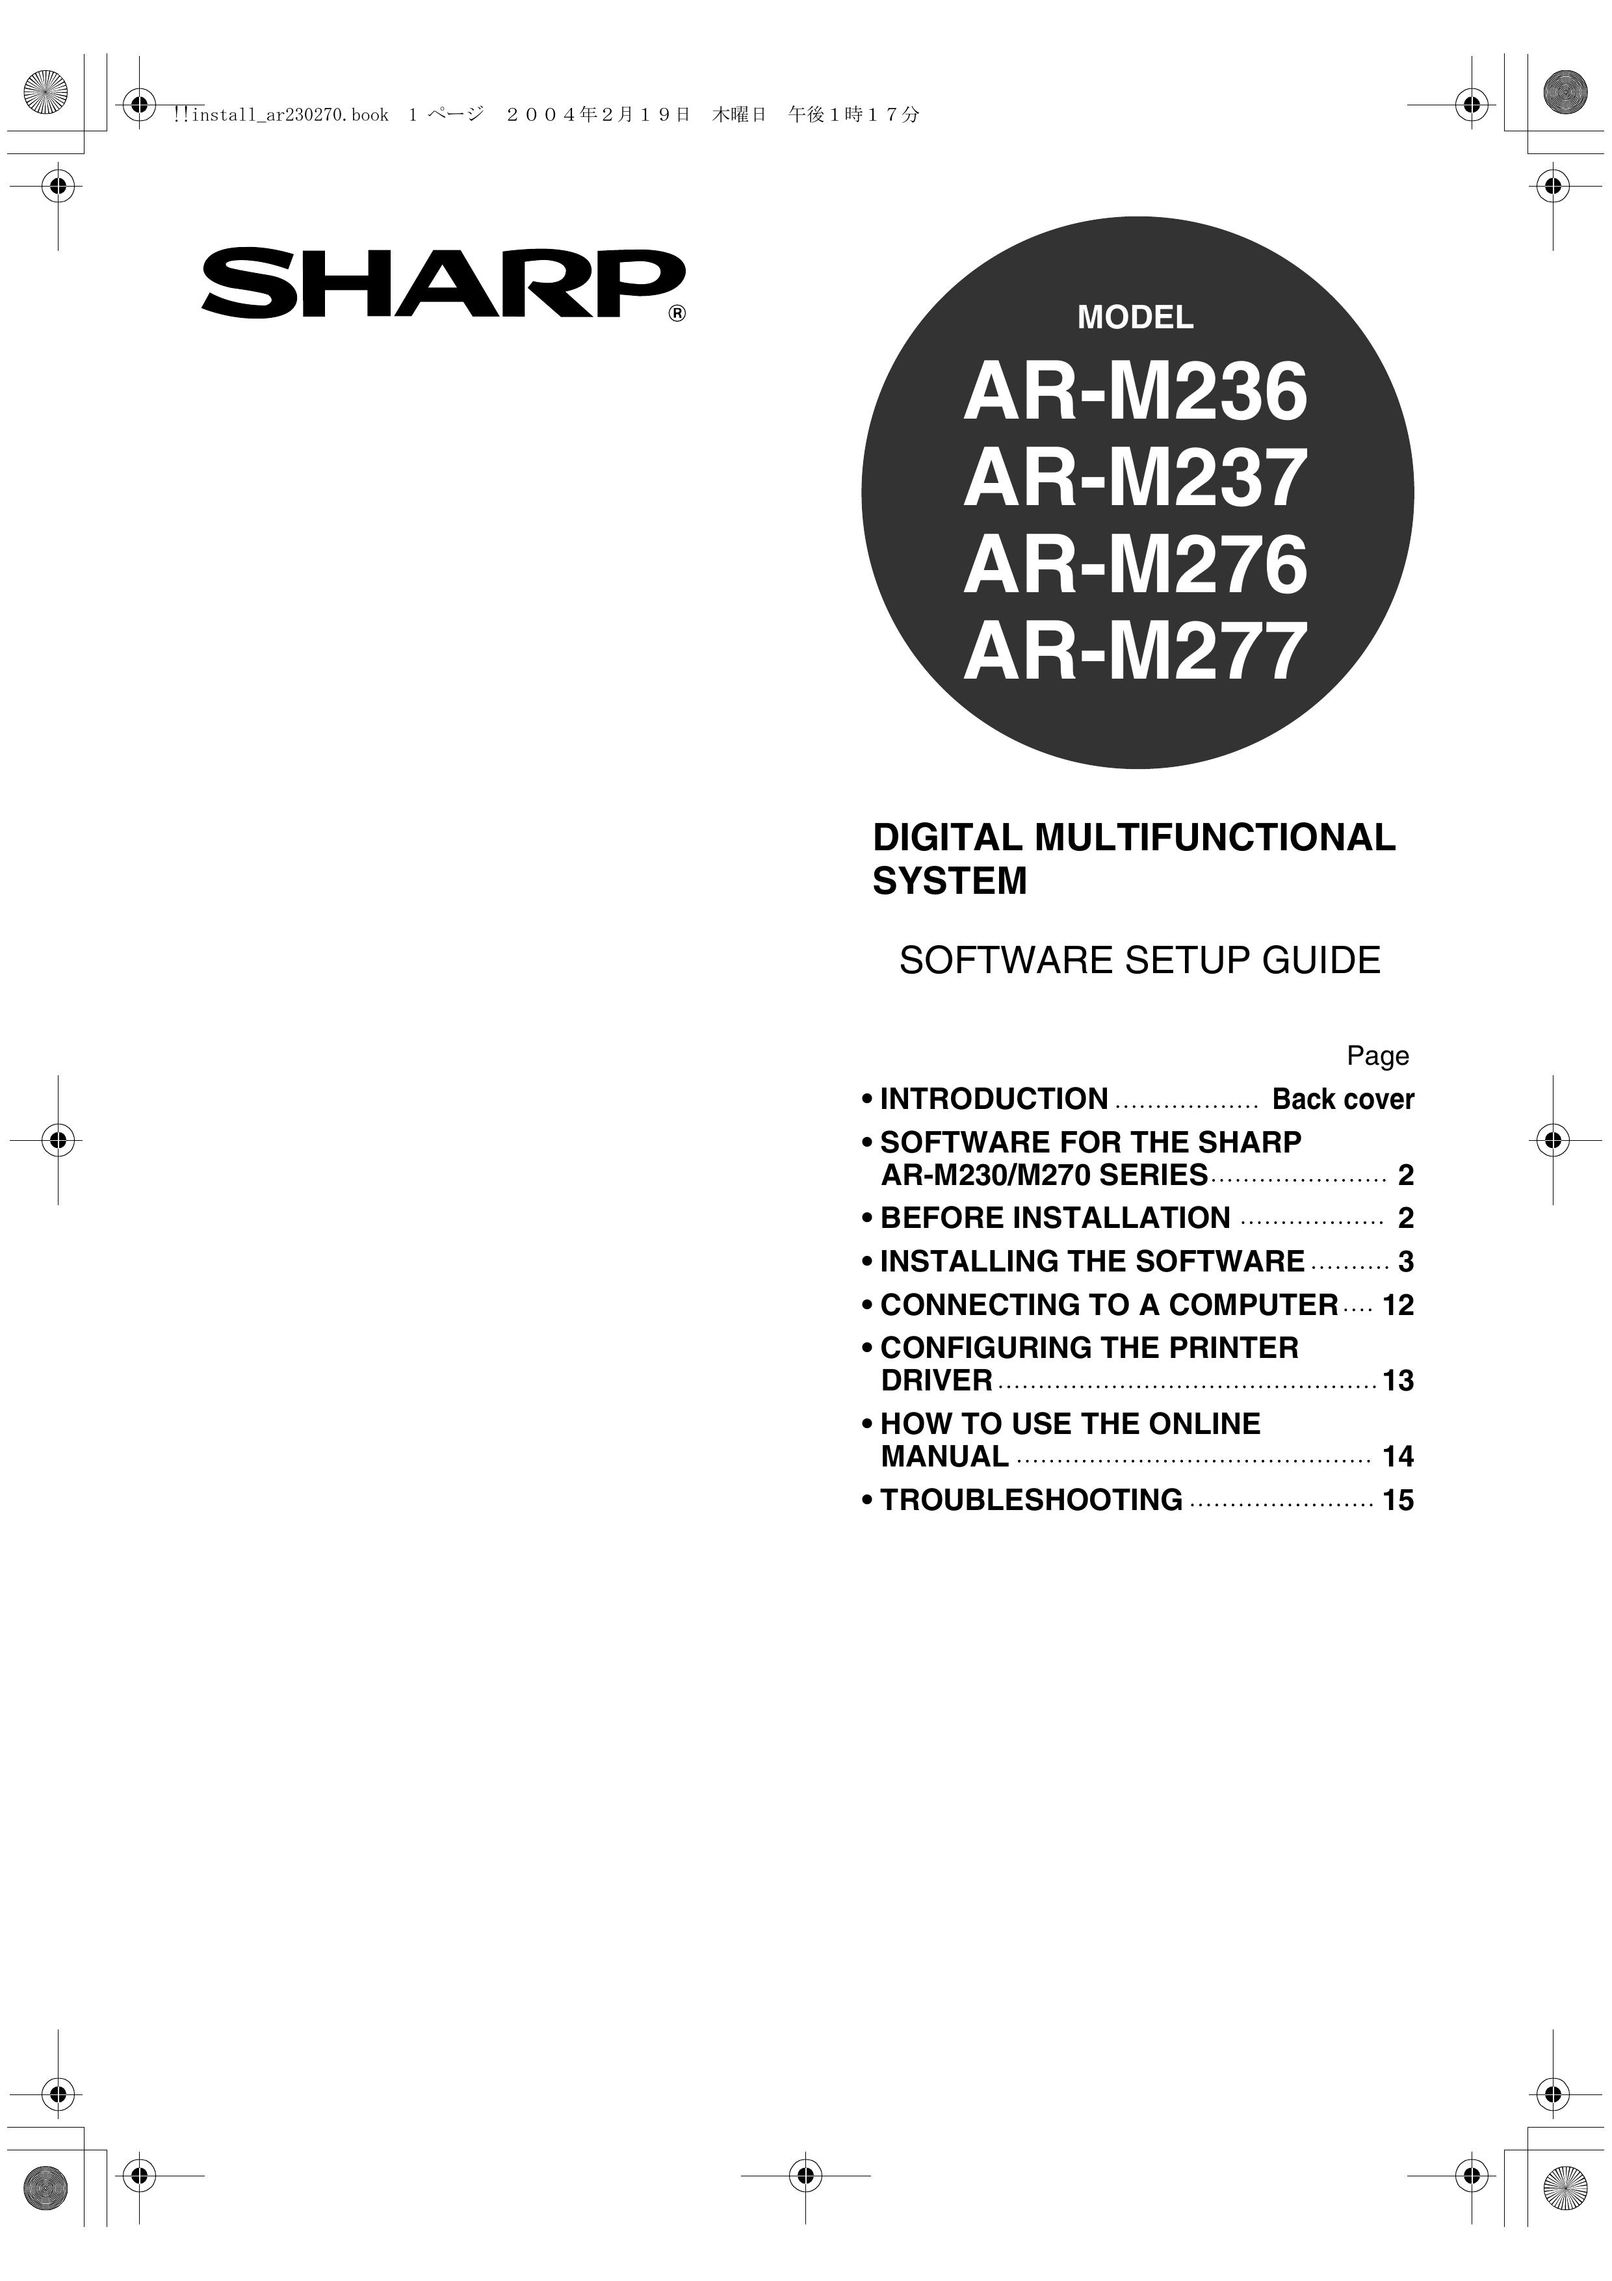 Sharp AR-M277 Fax Machine User Manual